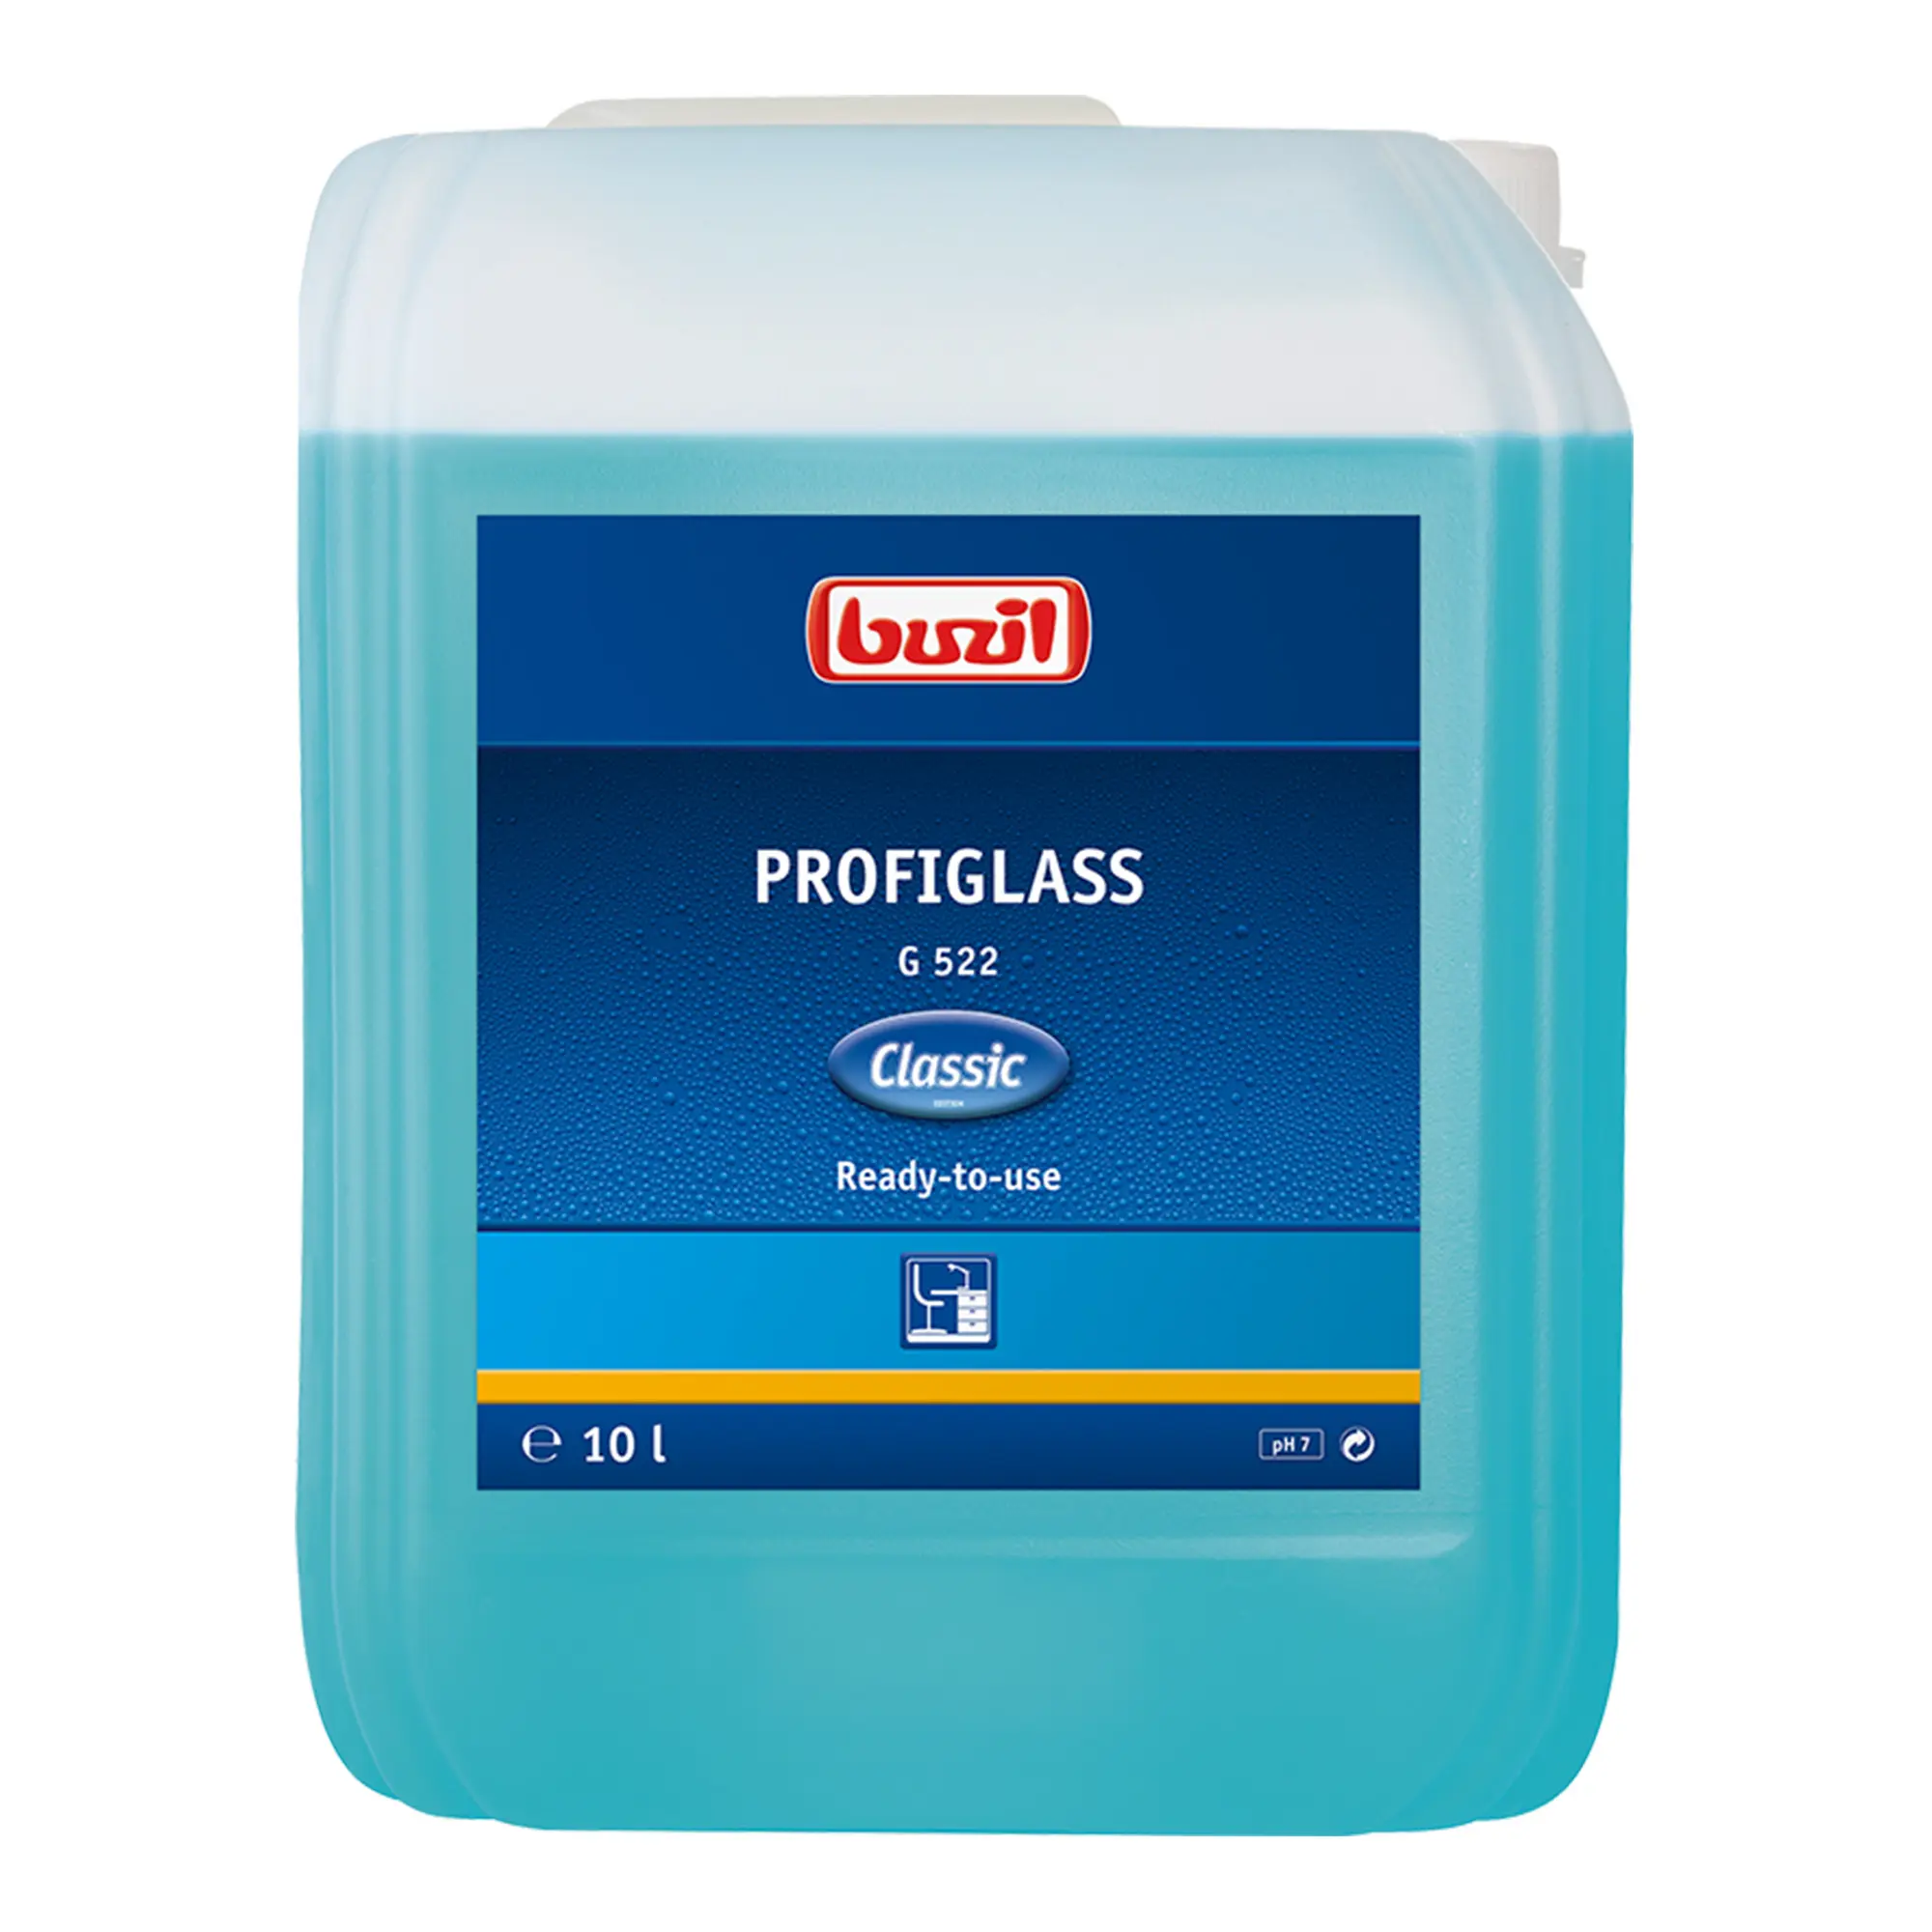 Buzil Profiglass G522 gebrauchsfertiger Glasreiniger 10 Liter Kanister G522-0010RA_1